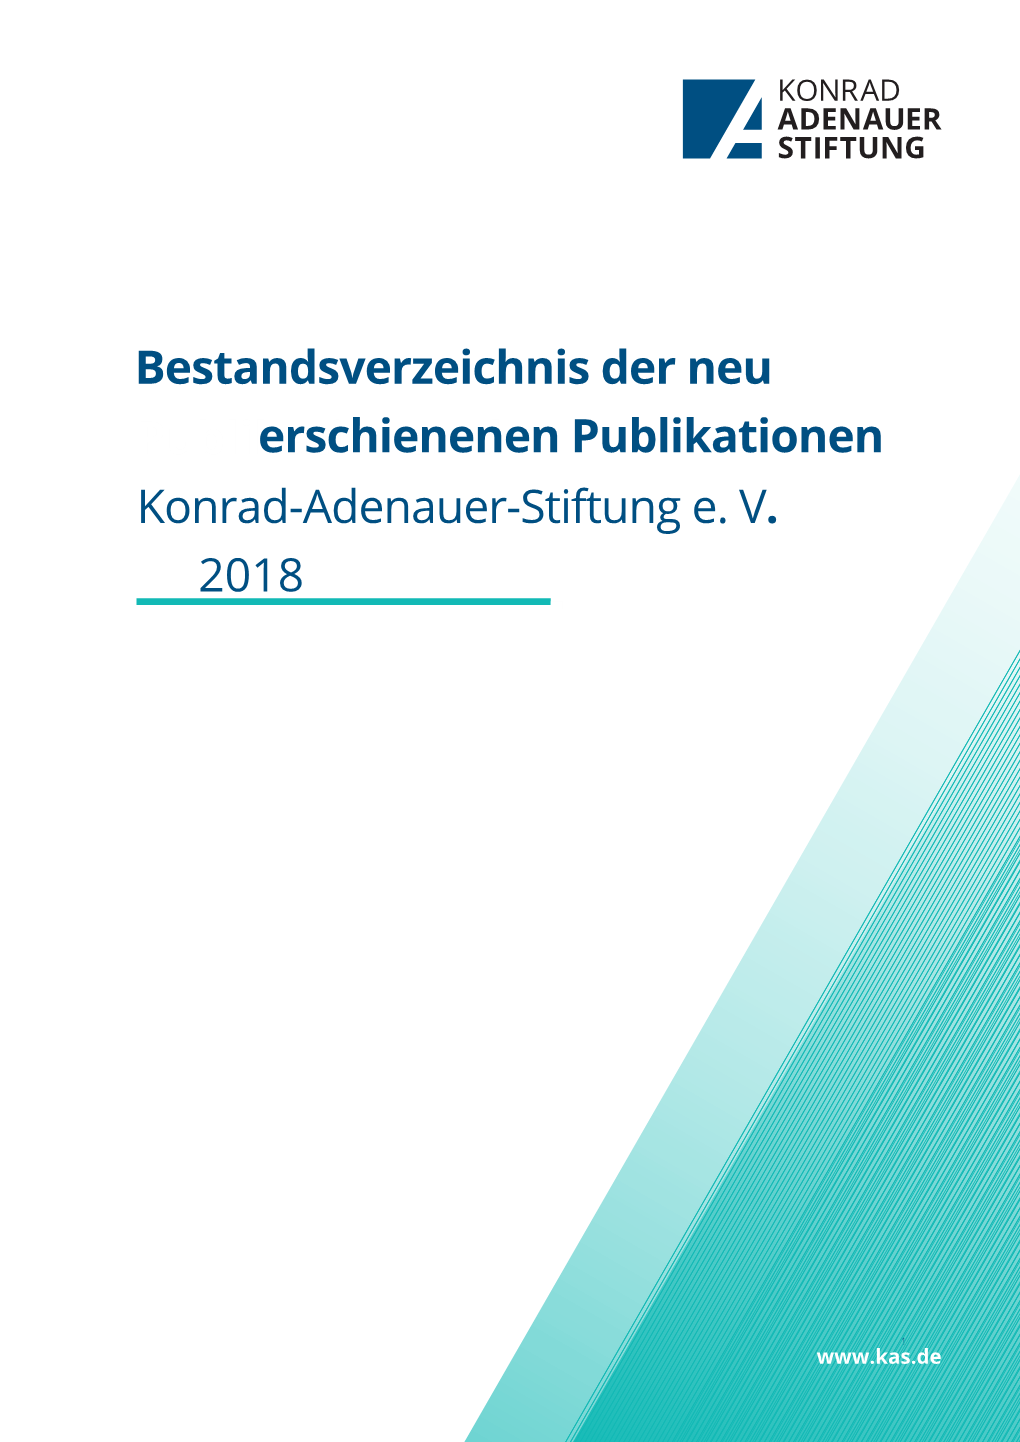 Publikationen Der Konrad-Adenauer-Stiftung E. V